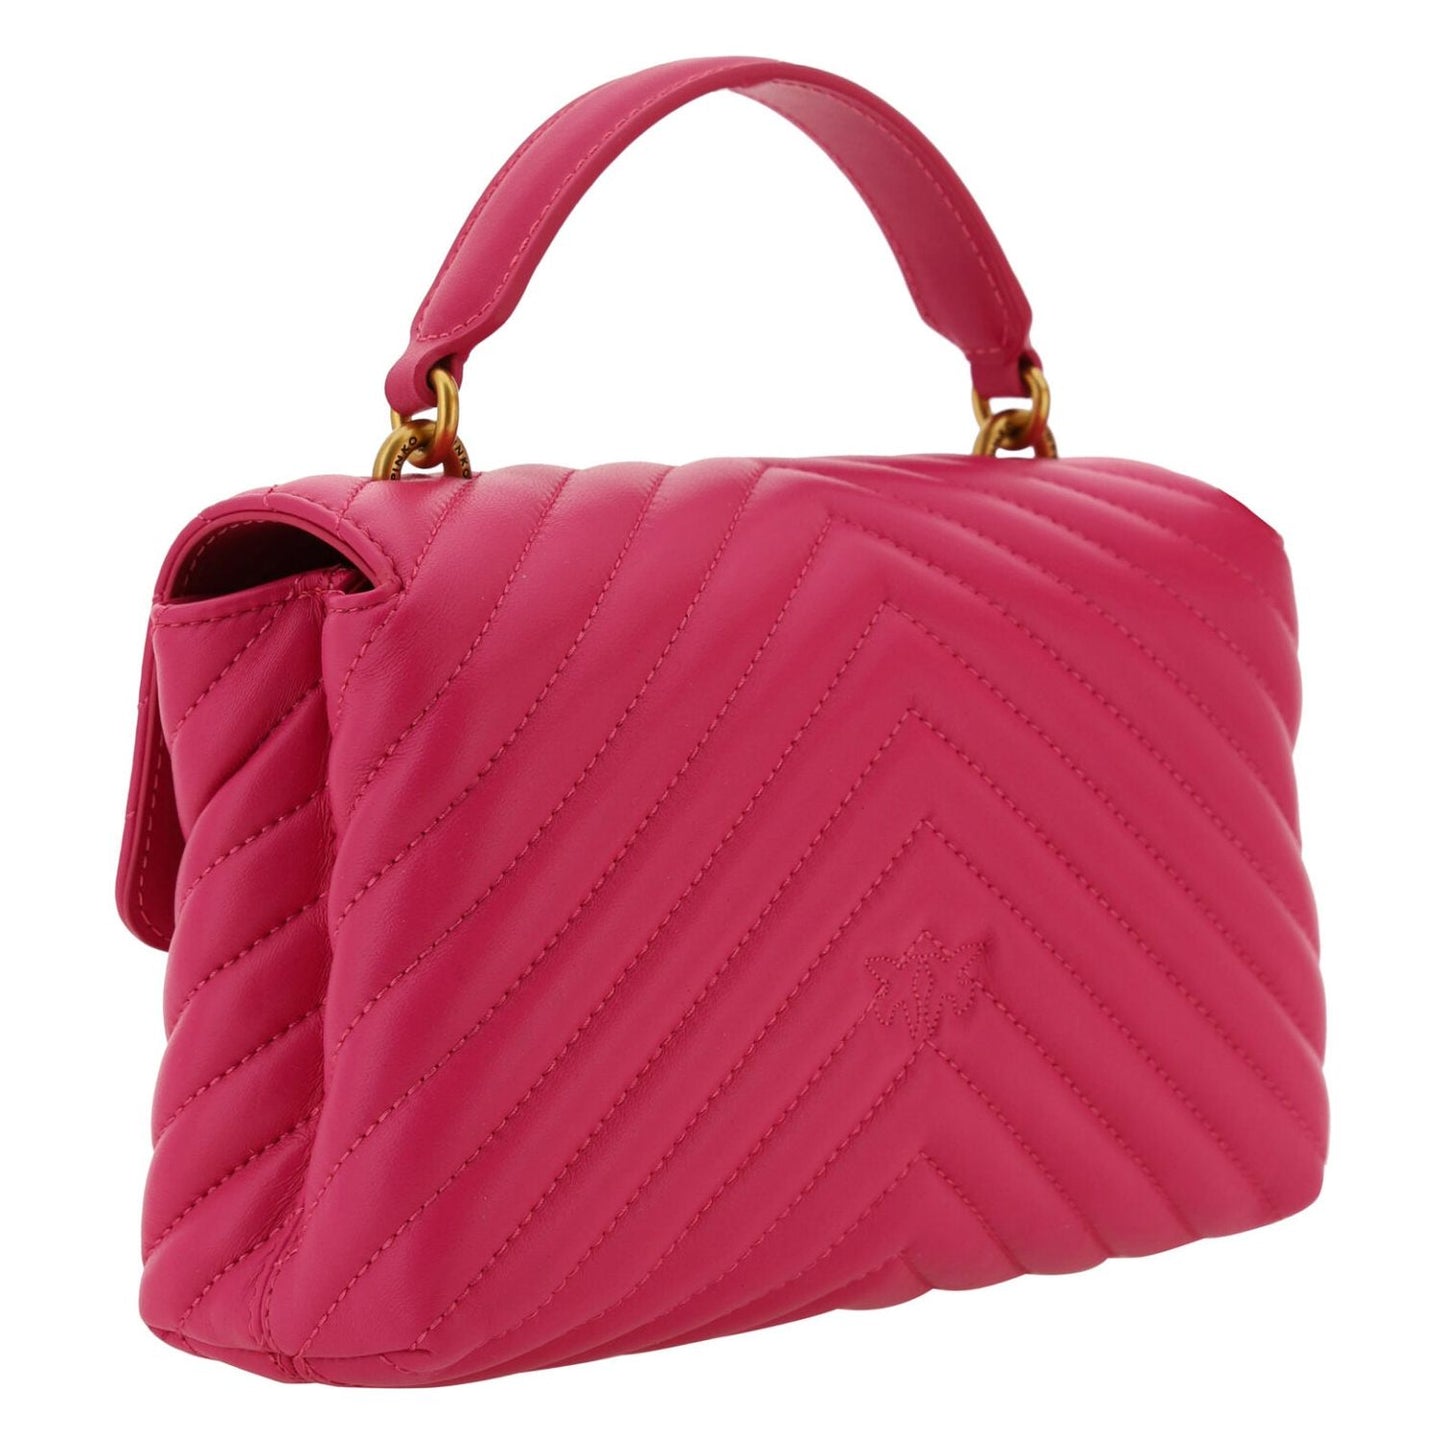 PINKO Chic Pink Quilted Leather Mini Handbag pink-calf-leather-love-lady-mini-handbag-1 14D8D958-6570-4158-AF95-2D45623FD300-scaled-8eb3650b-cb0.jpg